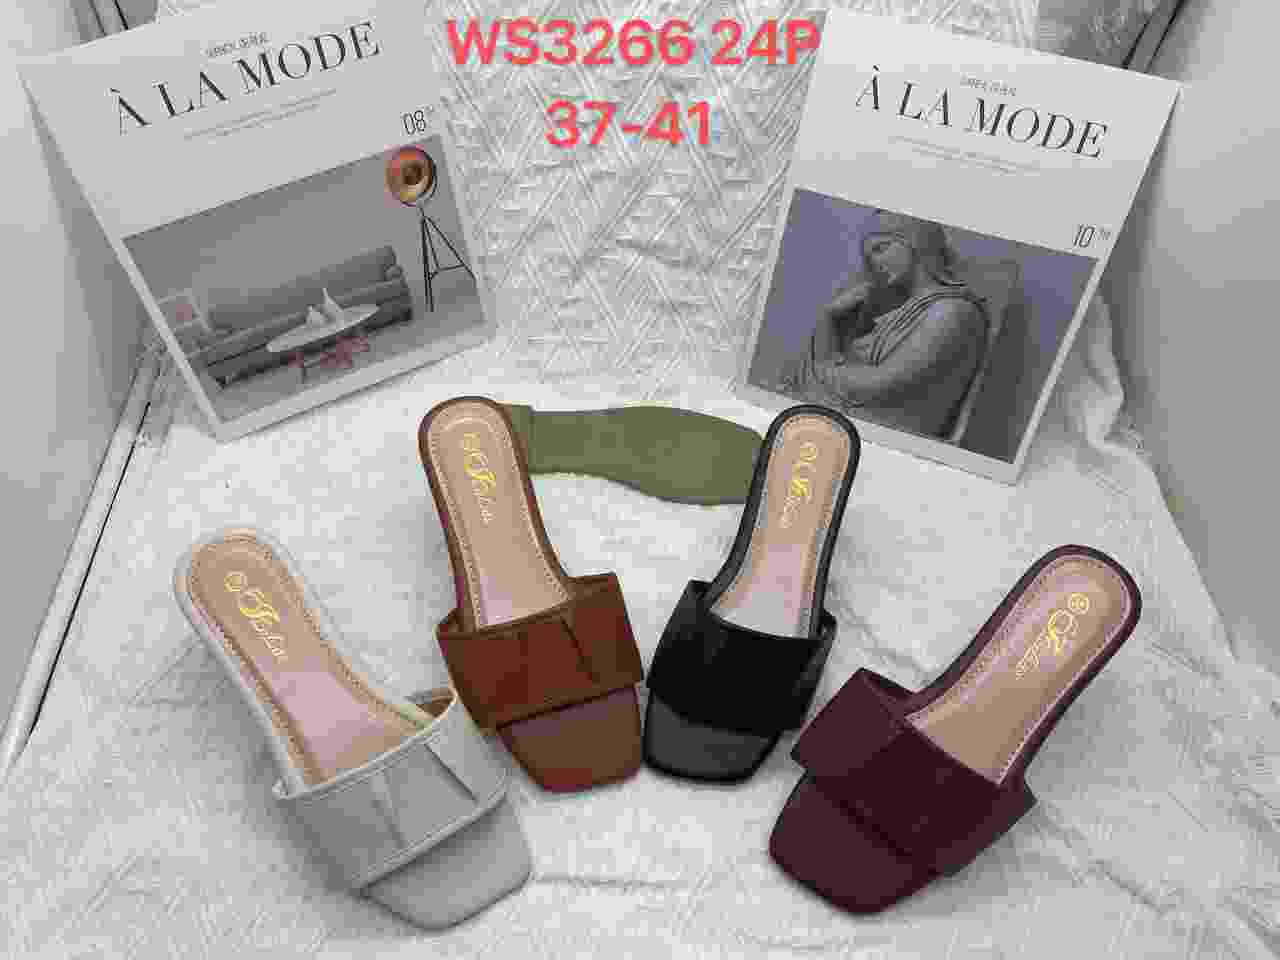 Ladies stylish Sandal shoes WS3266 24P